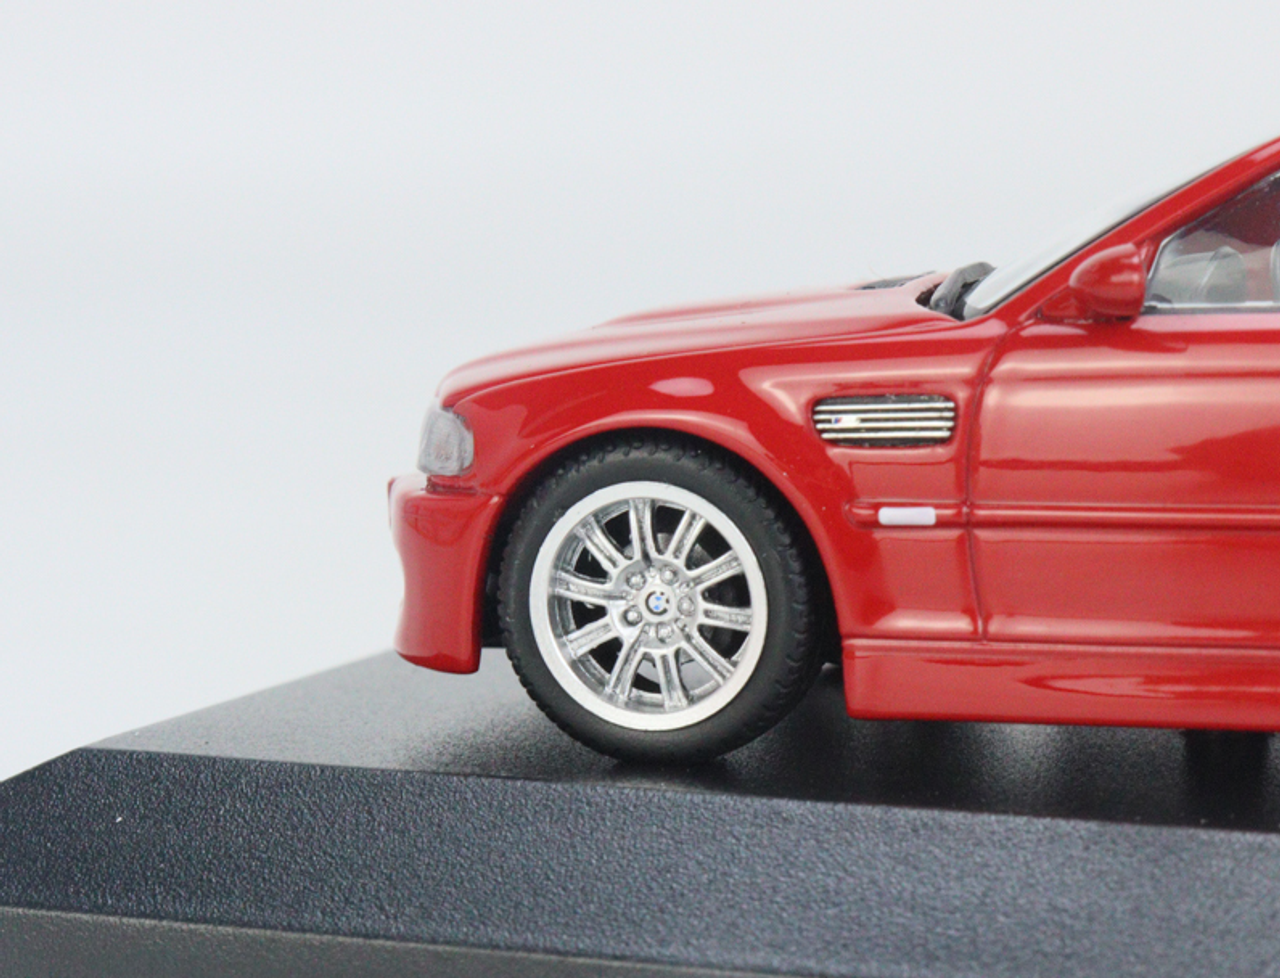 1/43 Minichamps 2001 BMW M3 (E46) Coupe (Red) Car Model